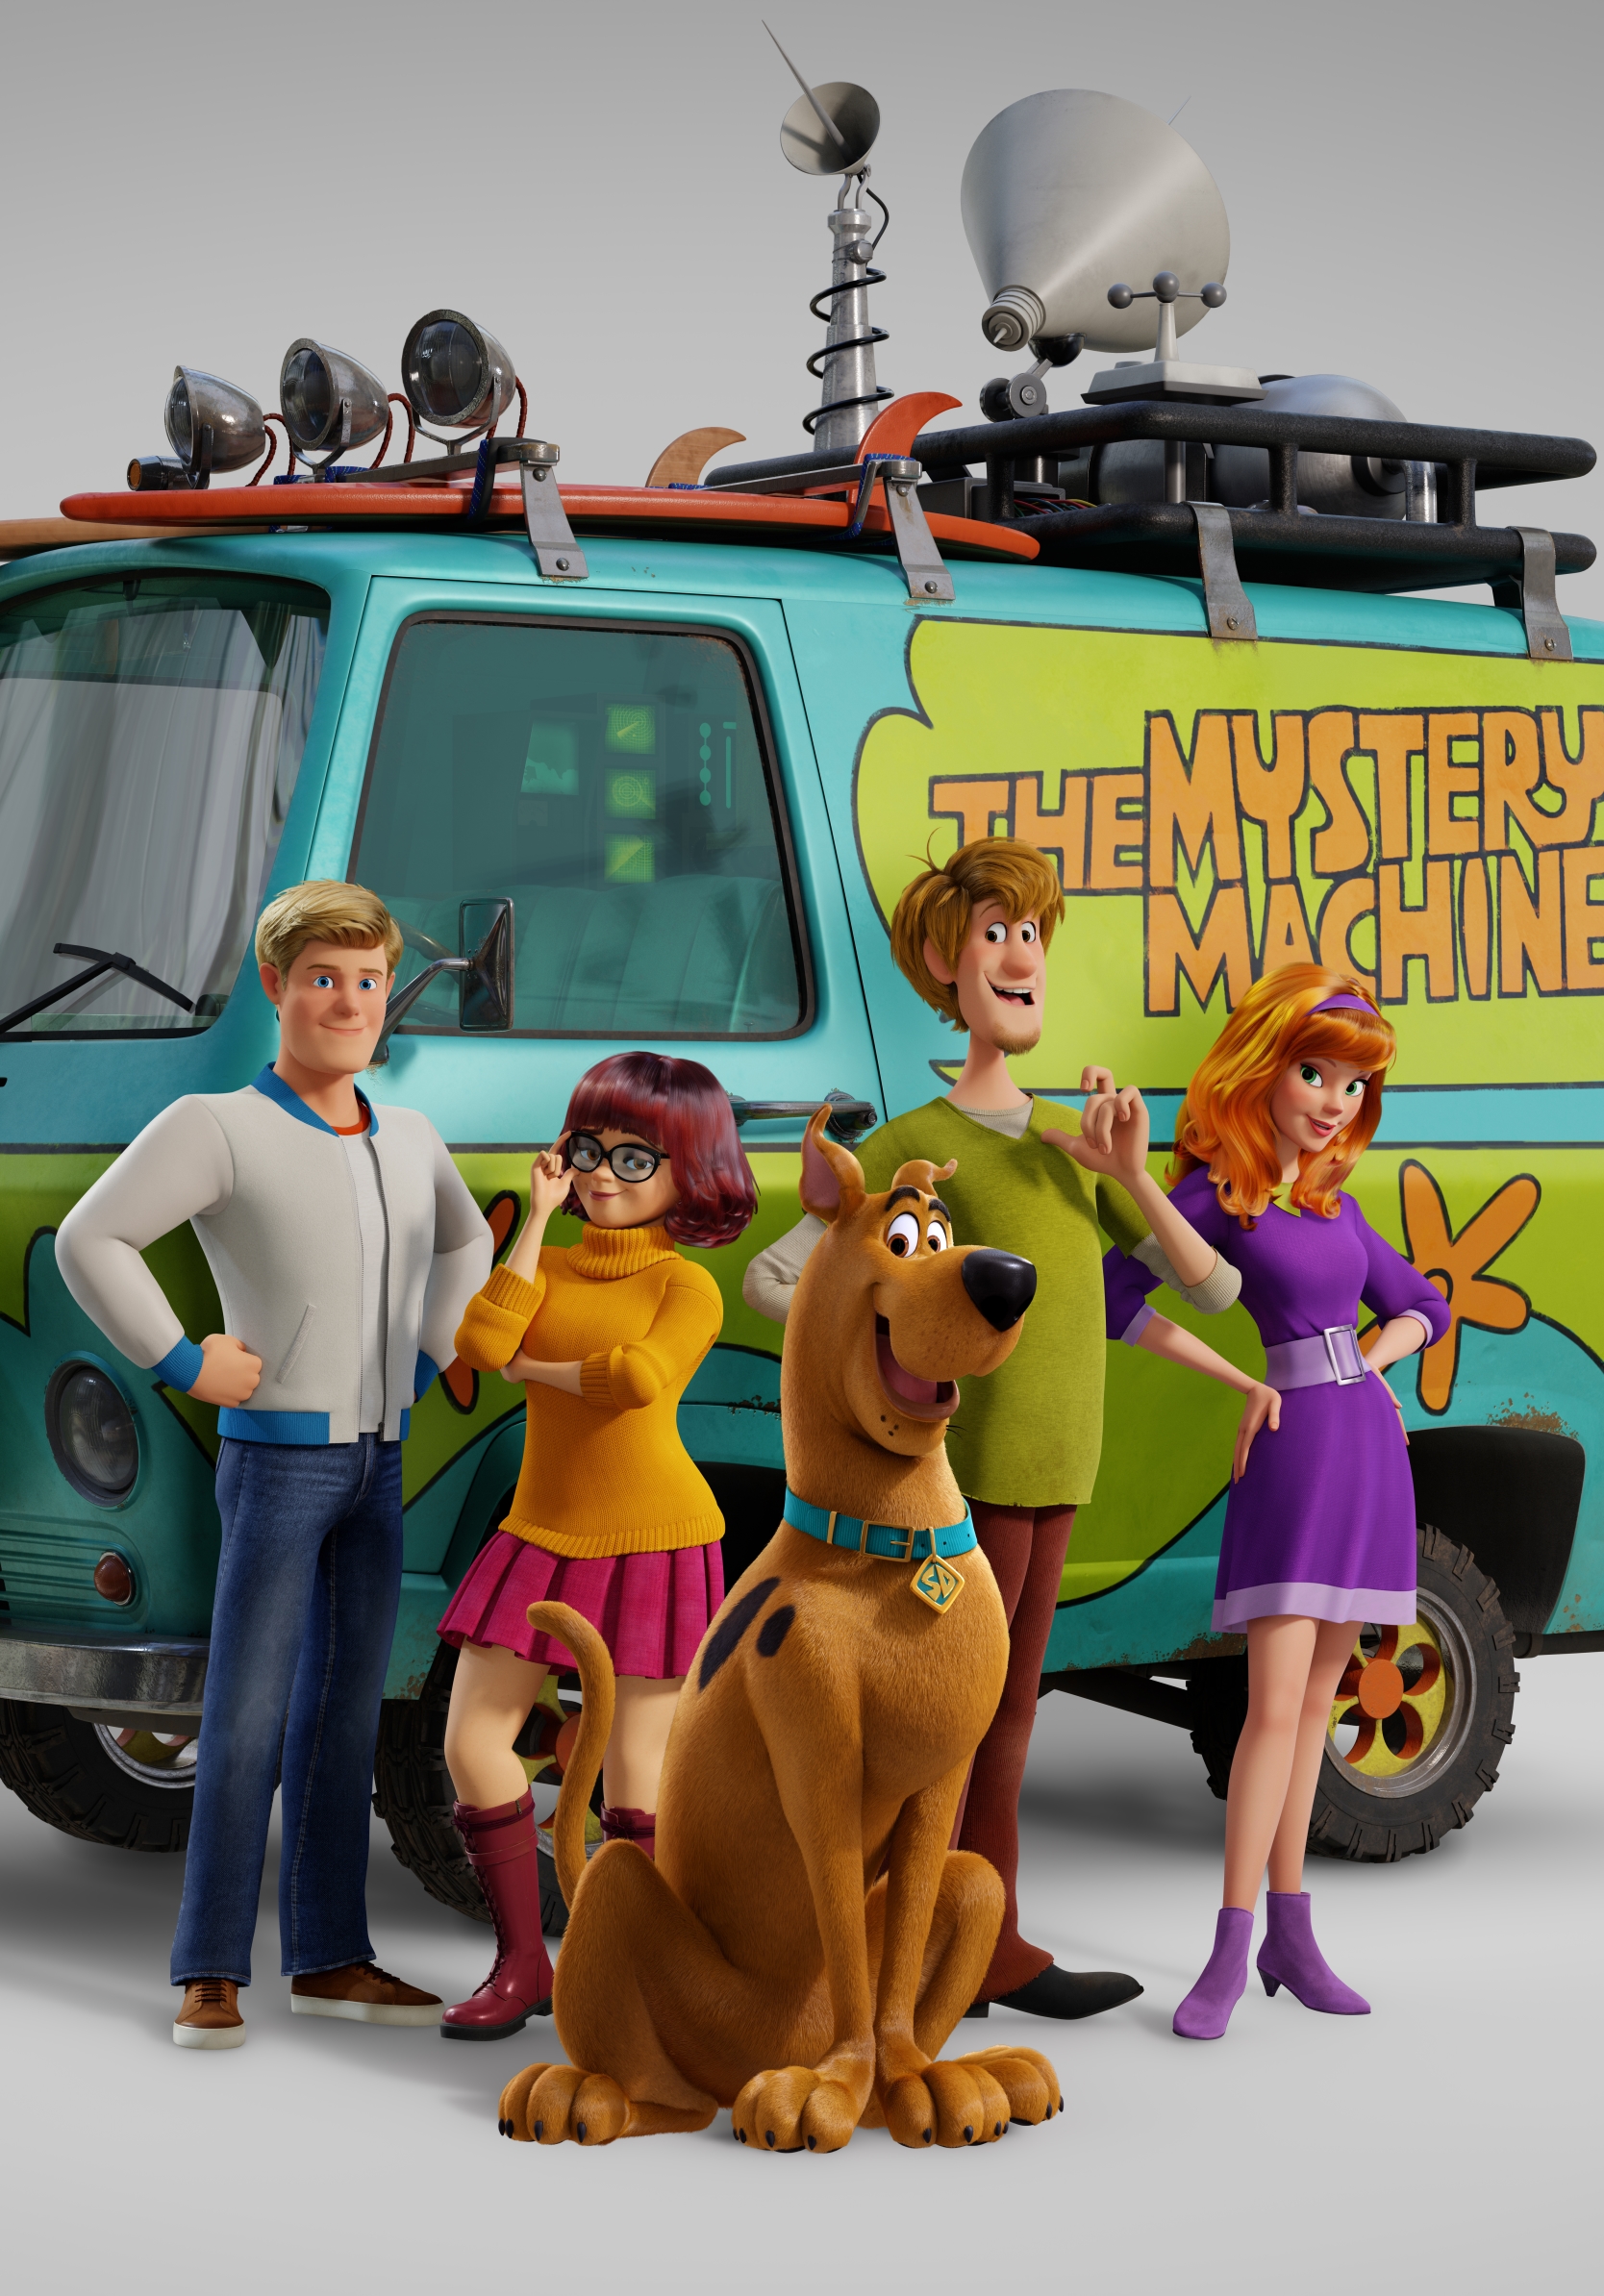 Handy-Wallpaper Filme, Scooby Doo, Daphne Blake, Fred Jones, Shaggy Rogers, Velma Dinkley, Scooby! Voll Verwedelt kostenlos herunterladen.